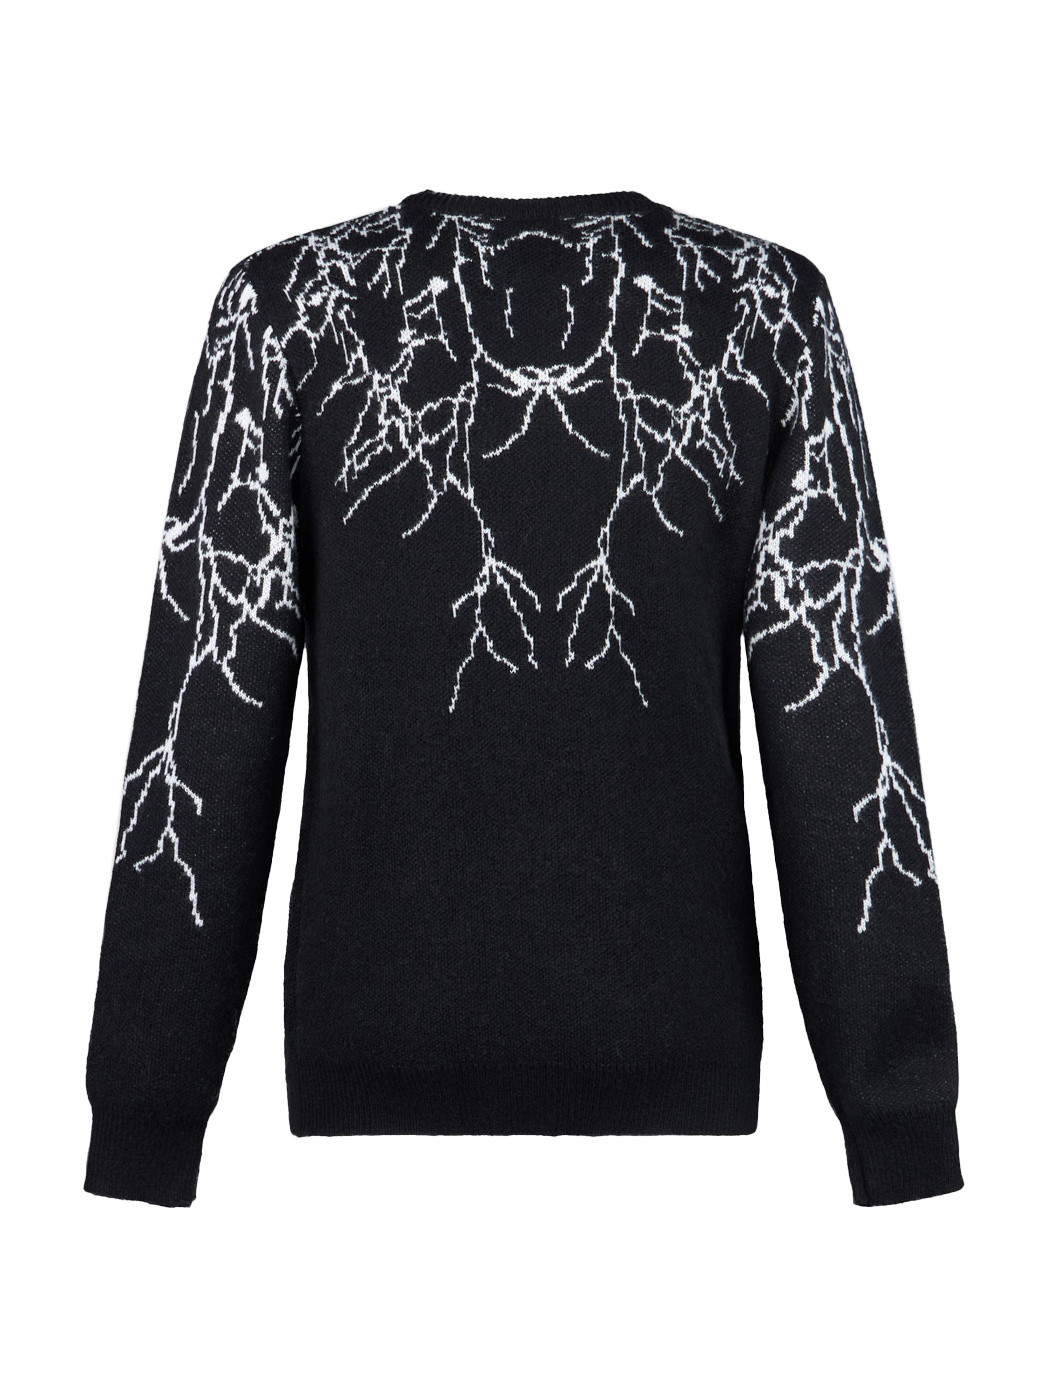 Phobia - Lightning bolt sweater, Black, large image number 3